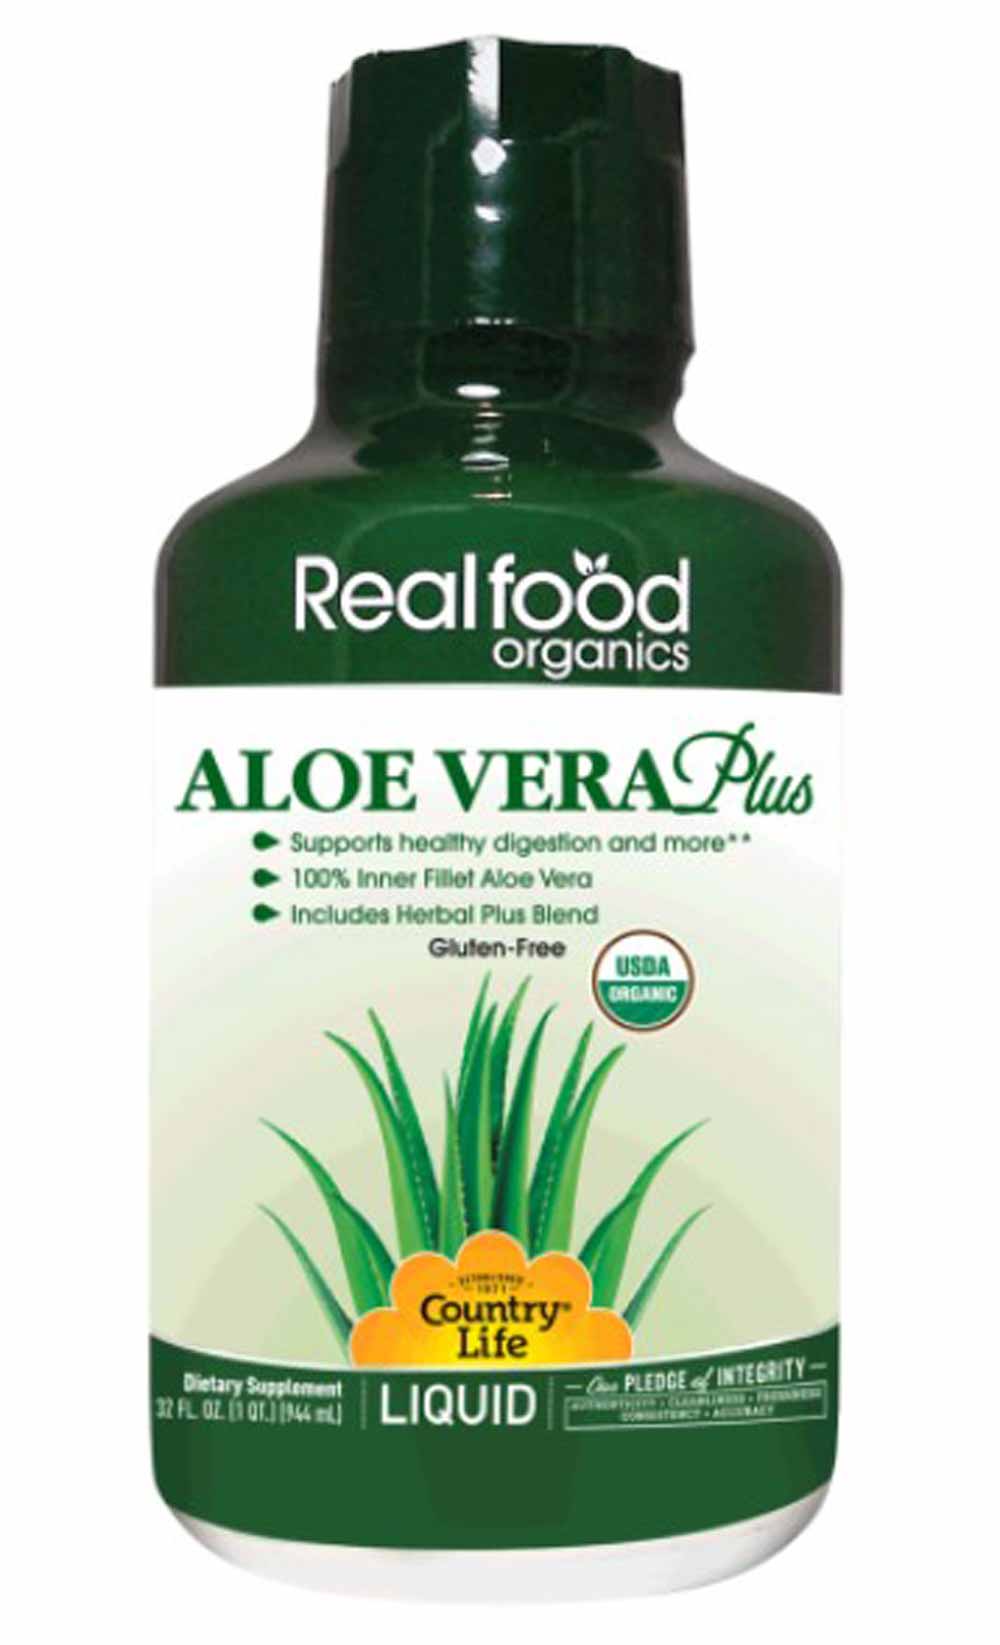 Country Life Realfood Organics® Aloe Vera Plus